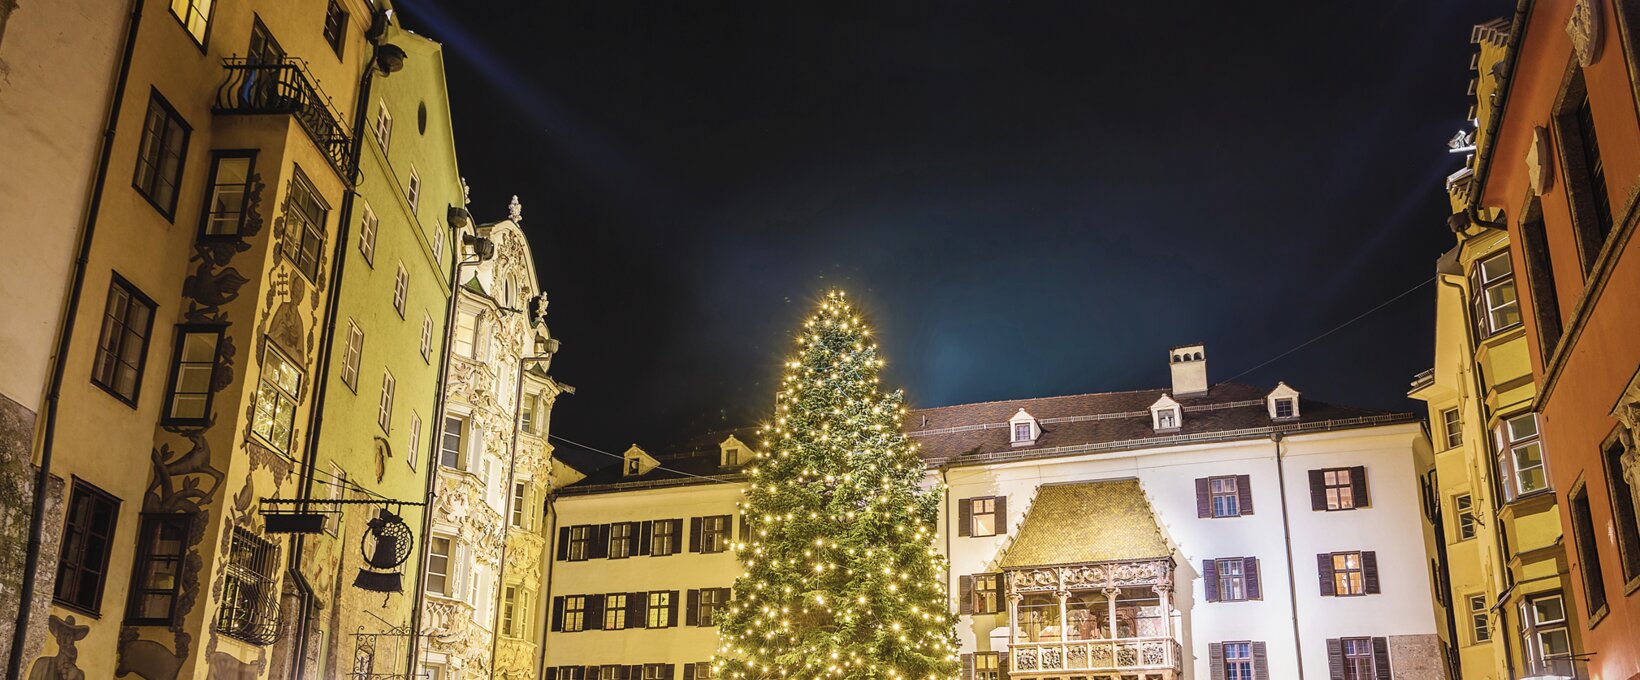  Golden Dachl with Christmas tree | Innsbruck